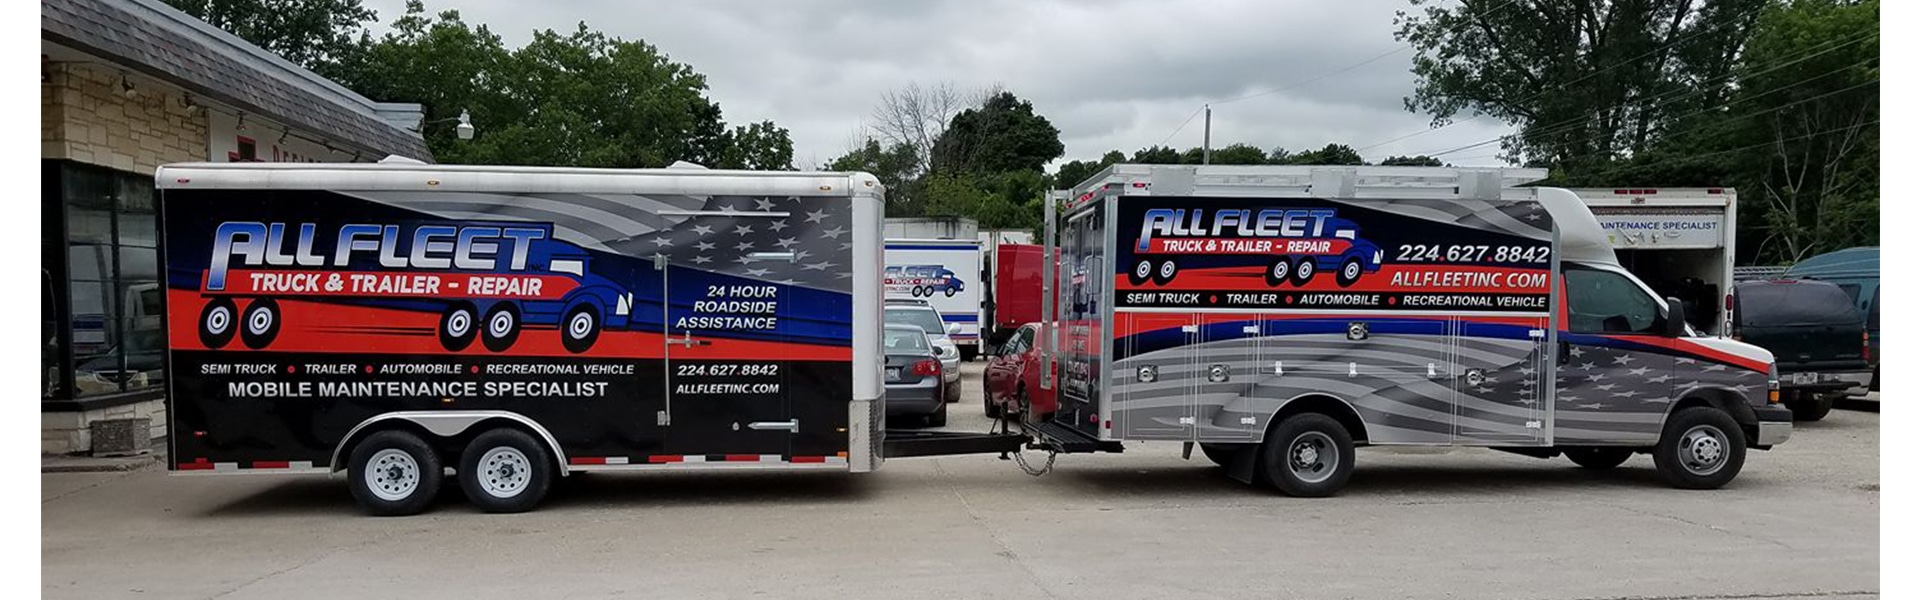 All Fleet Inc - Mobile Truck Repair - Stockton, CA, US, truck trailer repair near me